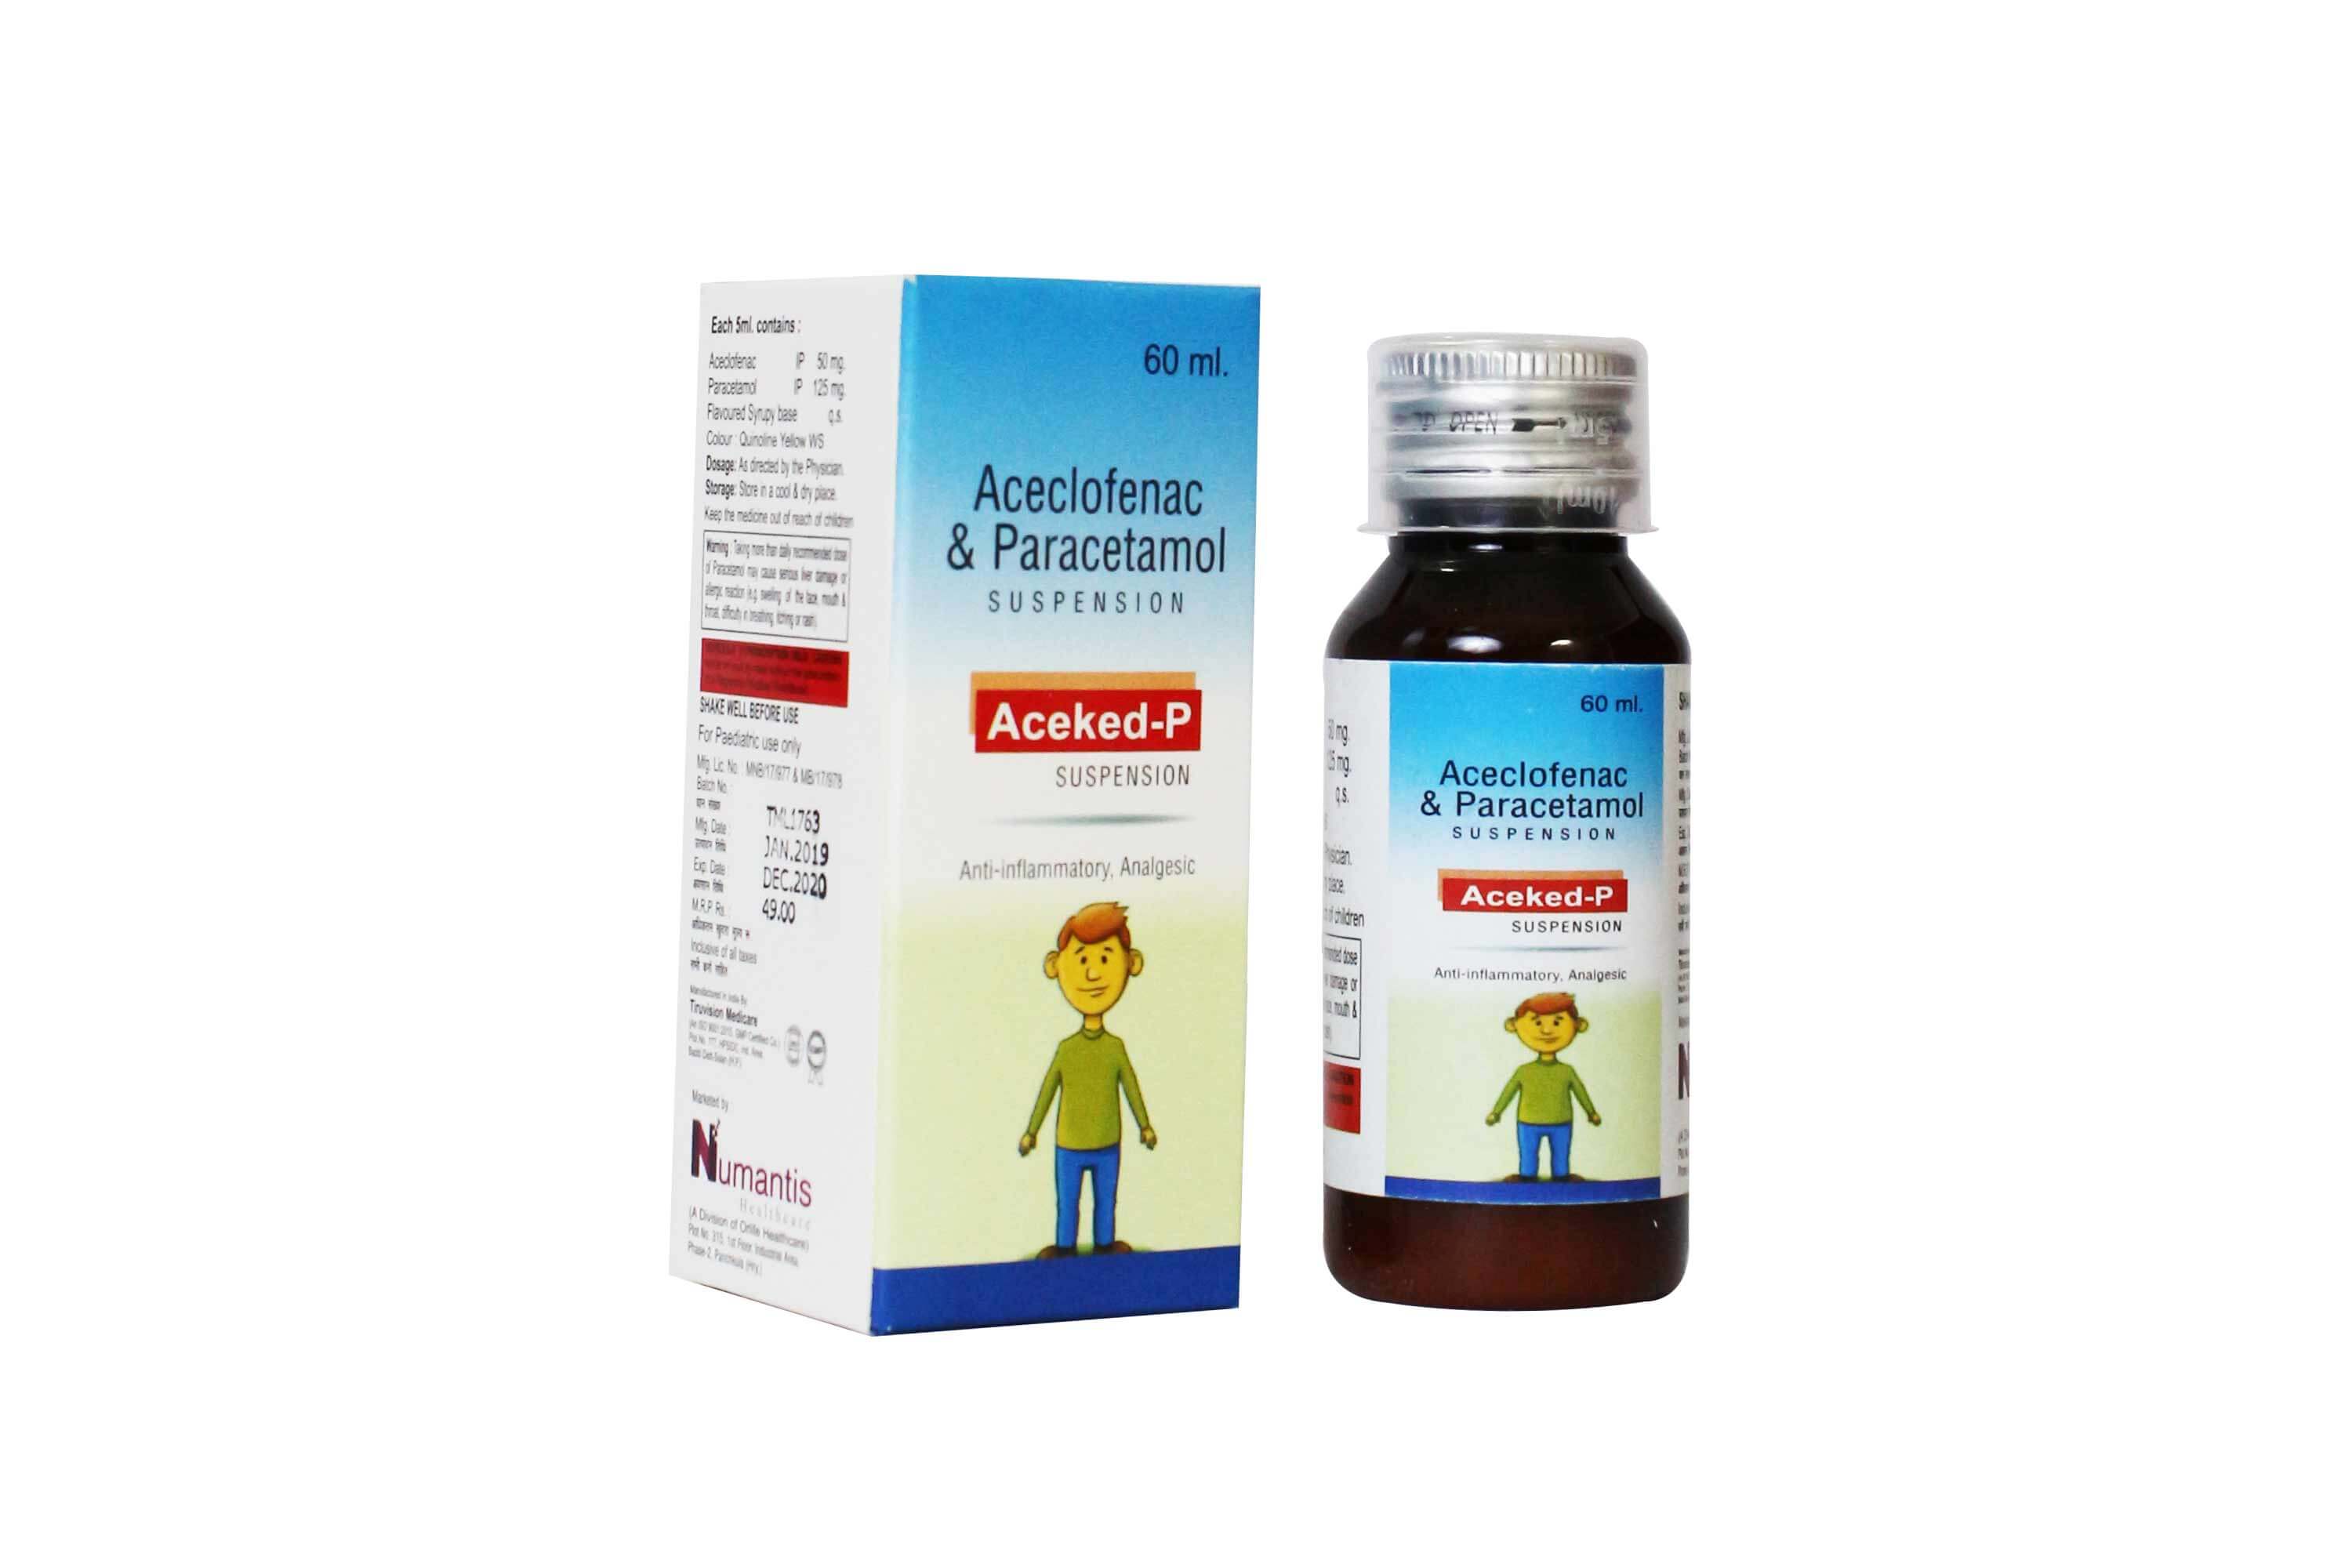 Product Name: Aceked P, Compositions of Aceked P are Aceclofenac & Paracetamol Suspension - Numantis Healthcare